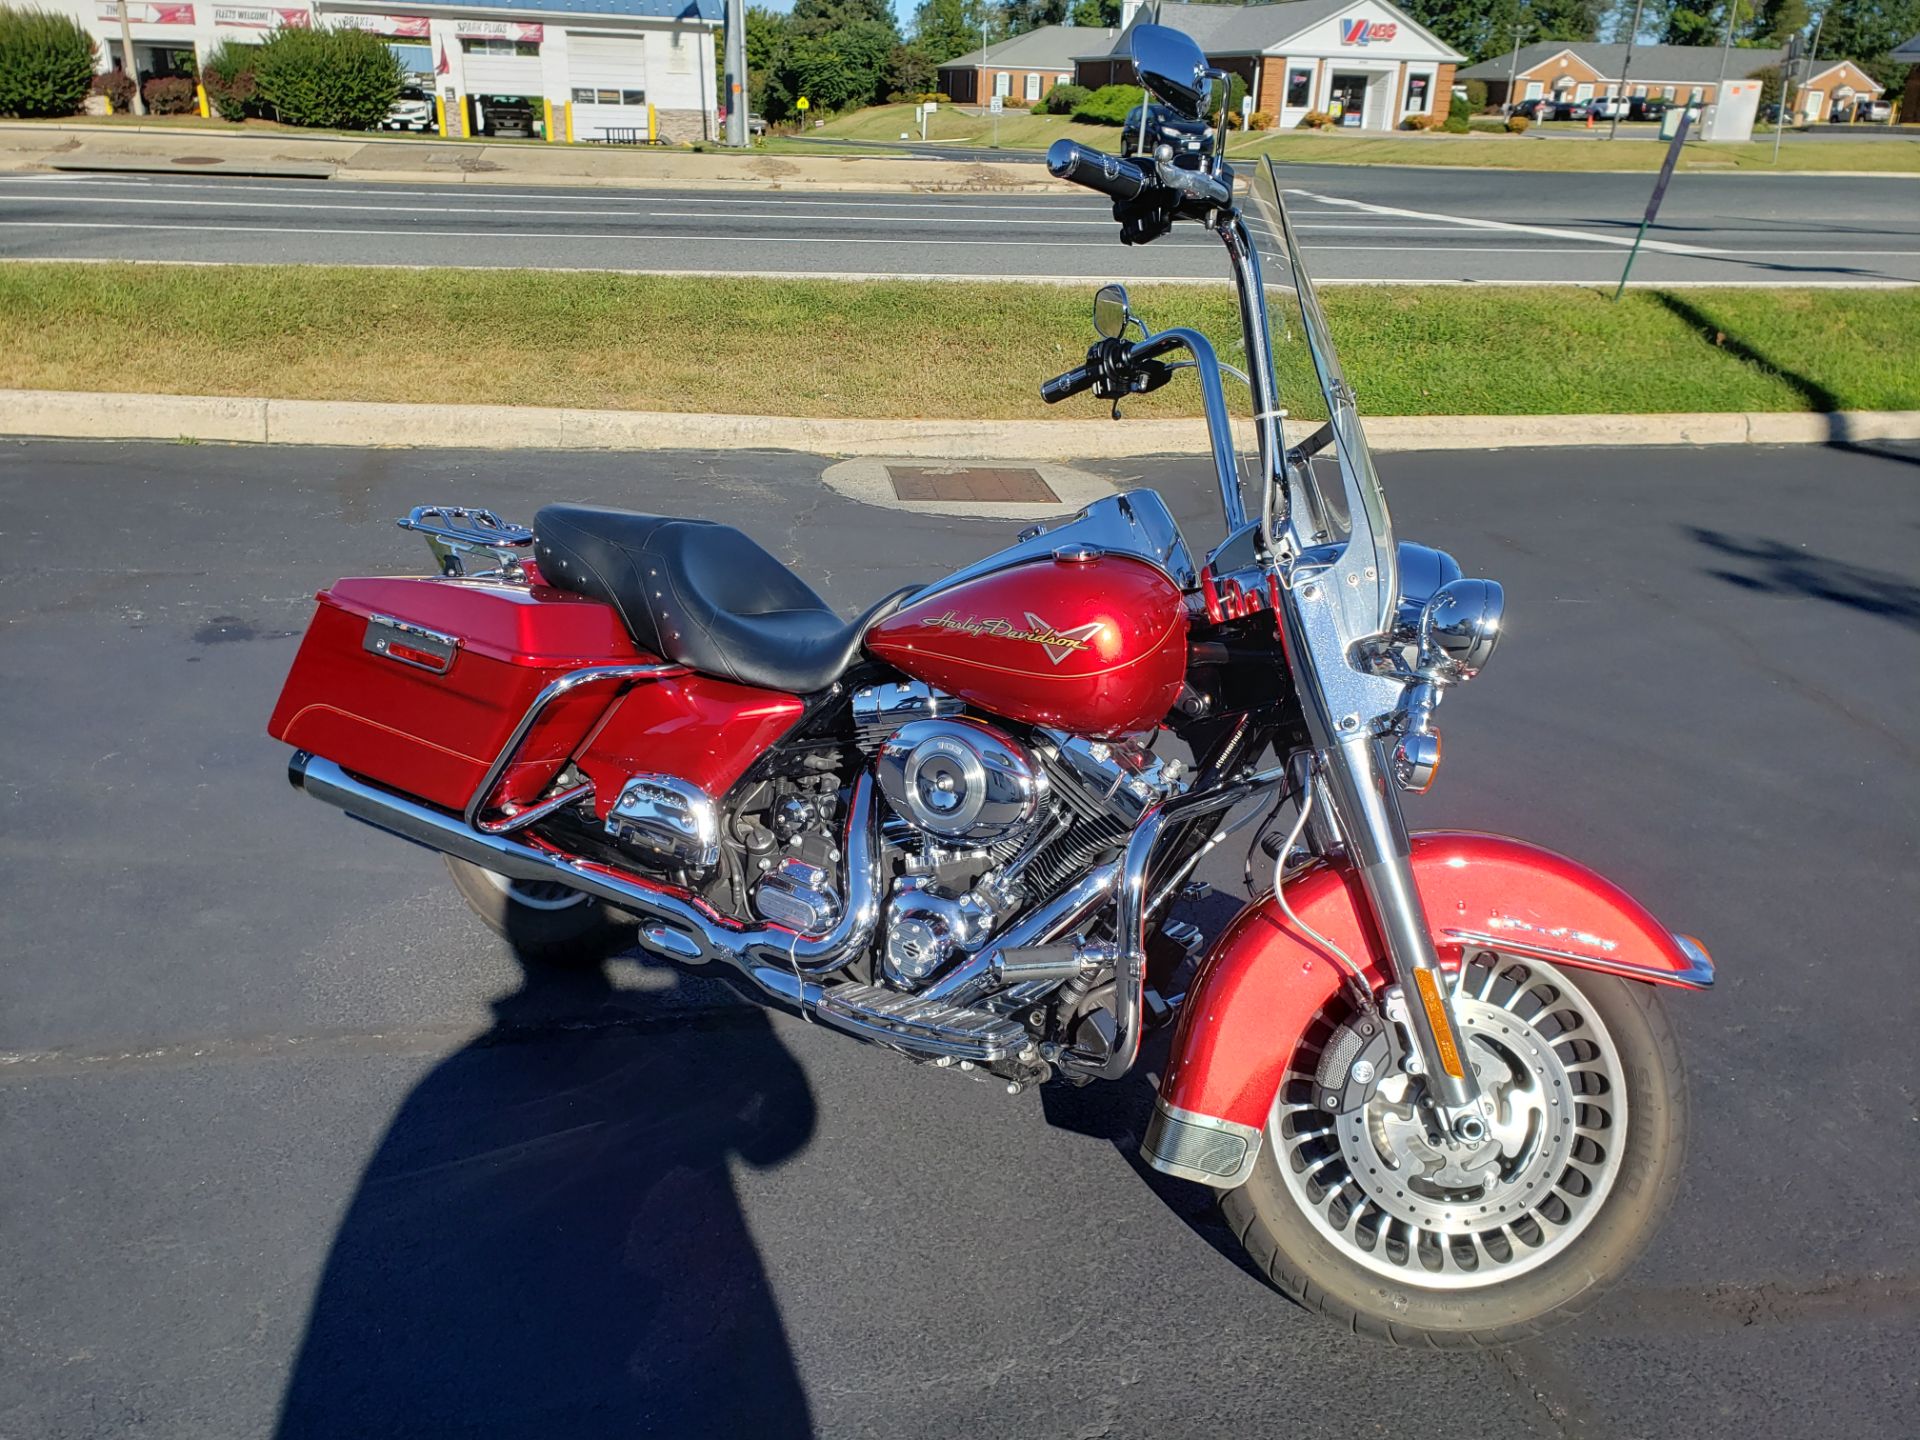 2013 Harley-Davidson Road King® in Lynchburg, Virginia - Photo 2